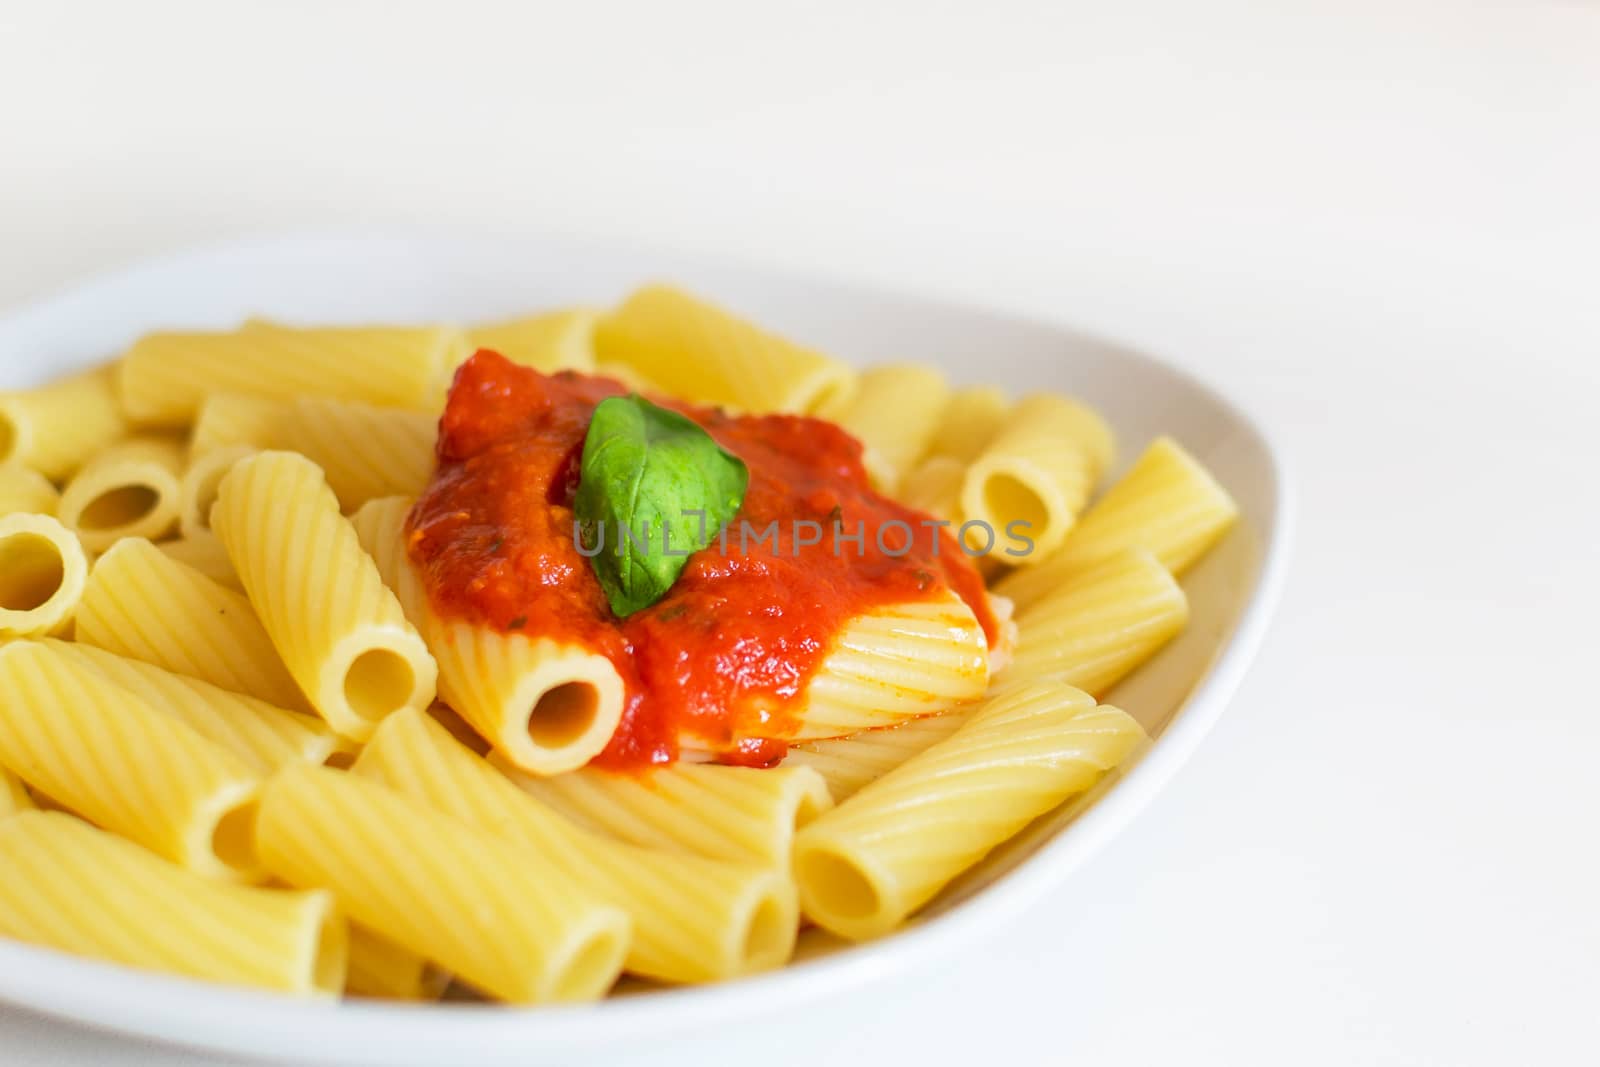 Italian macaroni with tomato sauce and leaves of basil